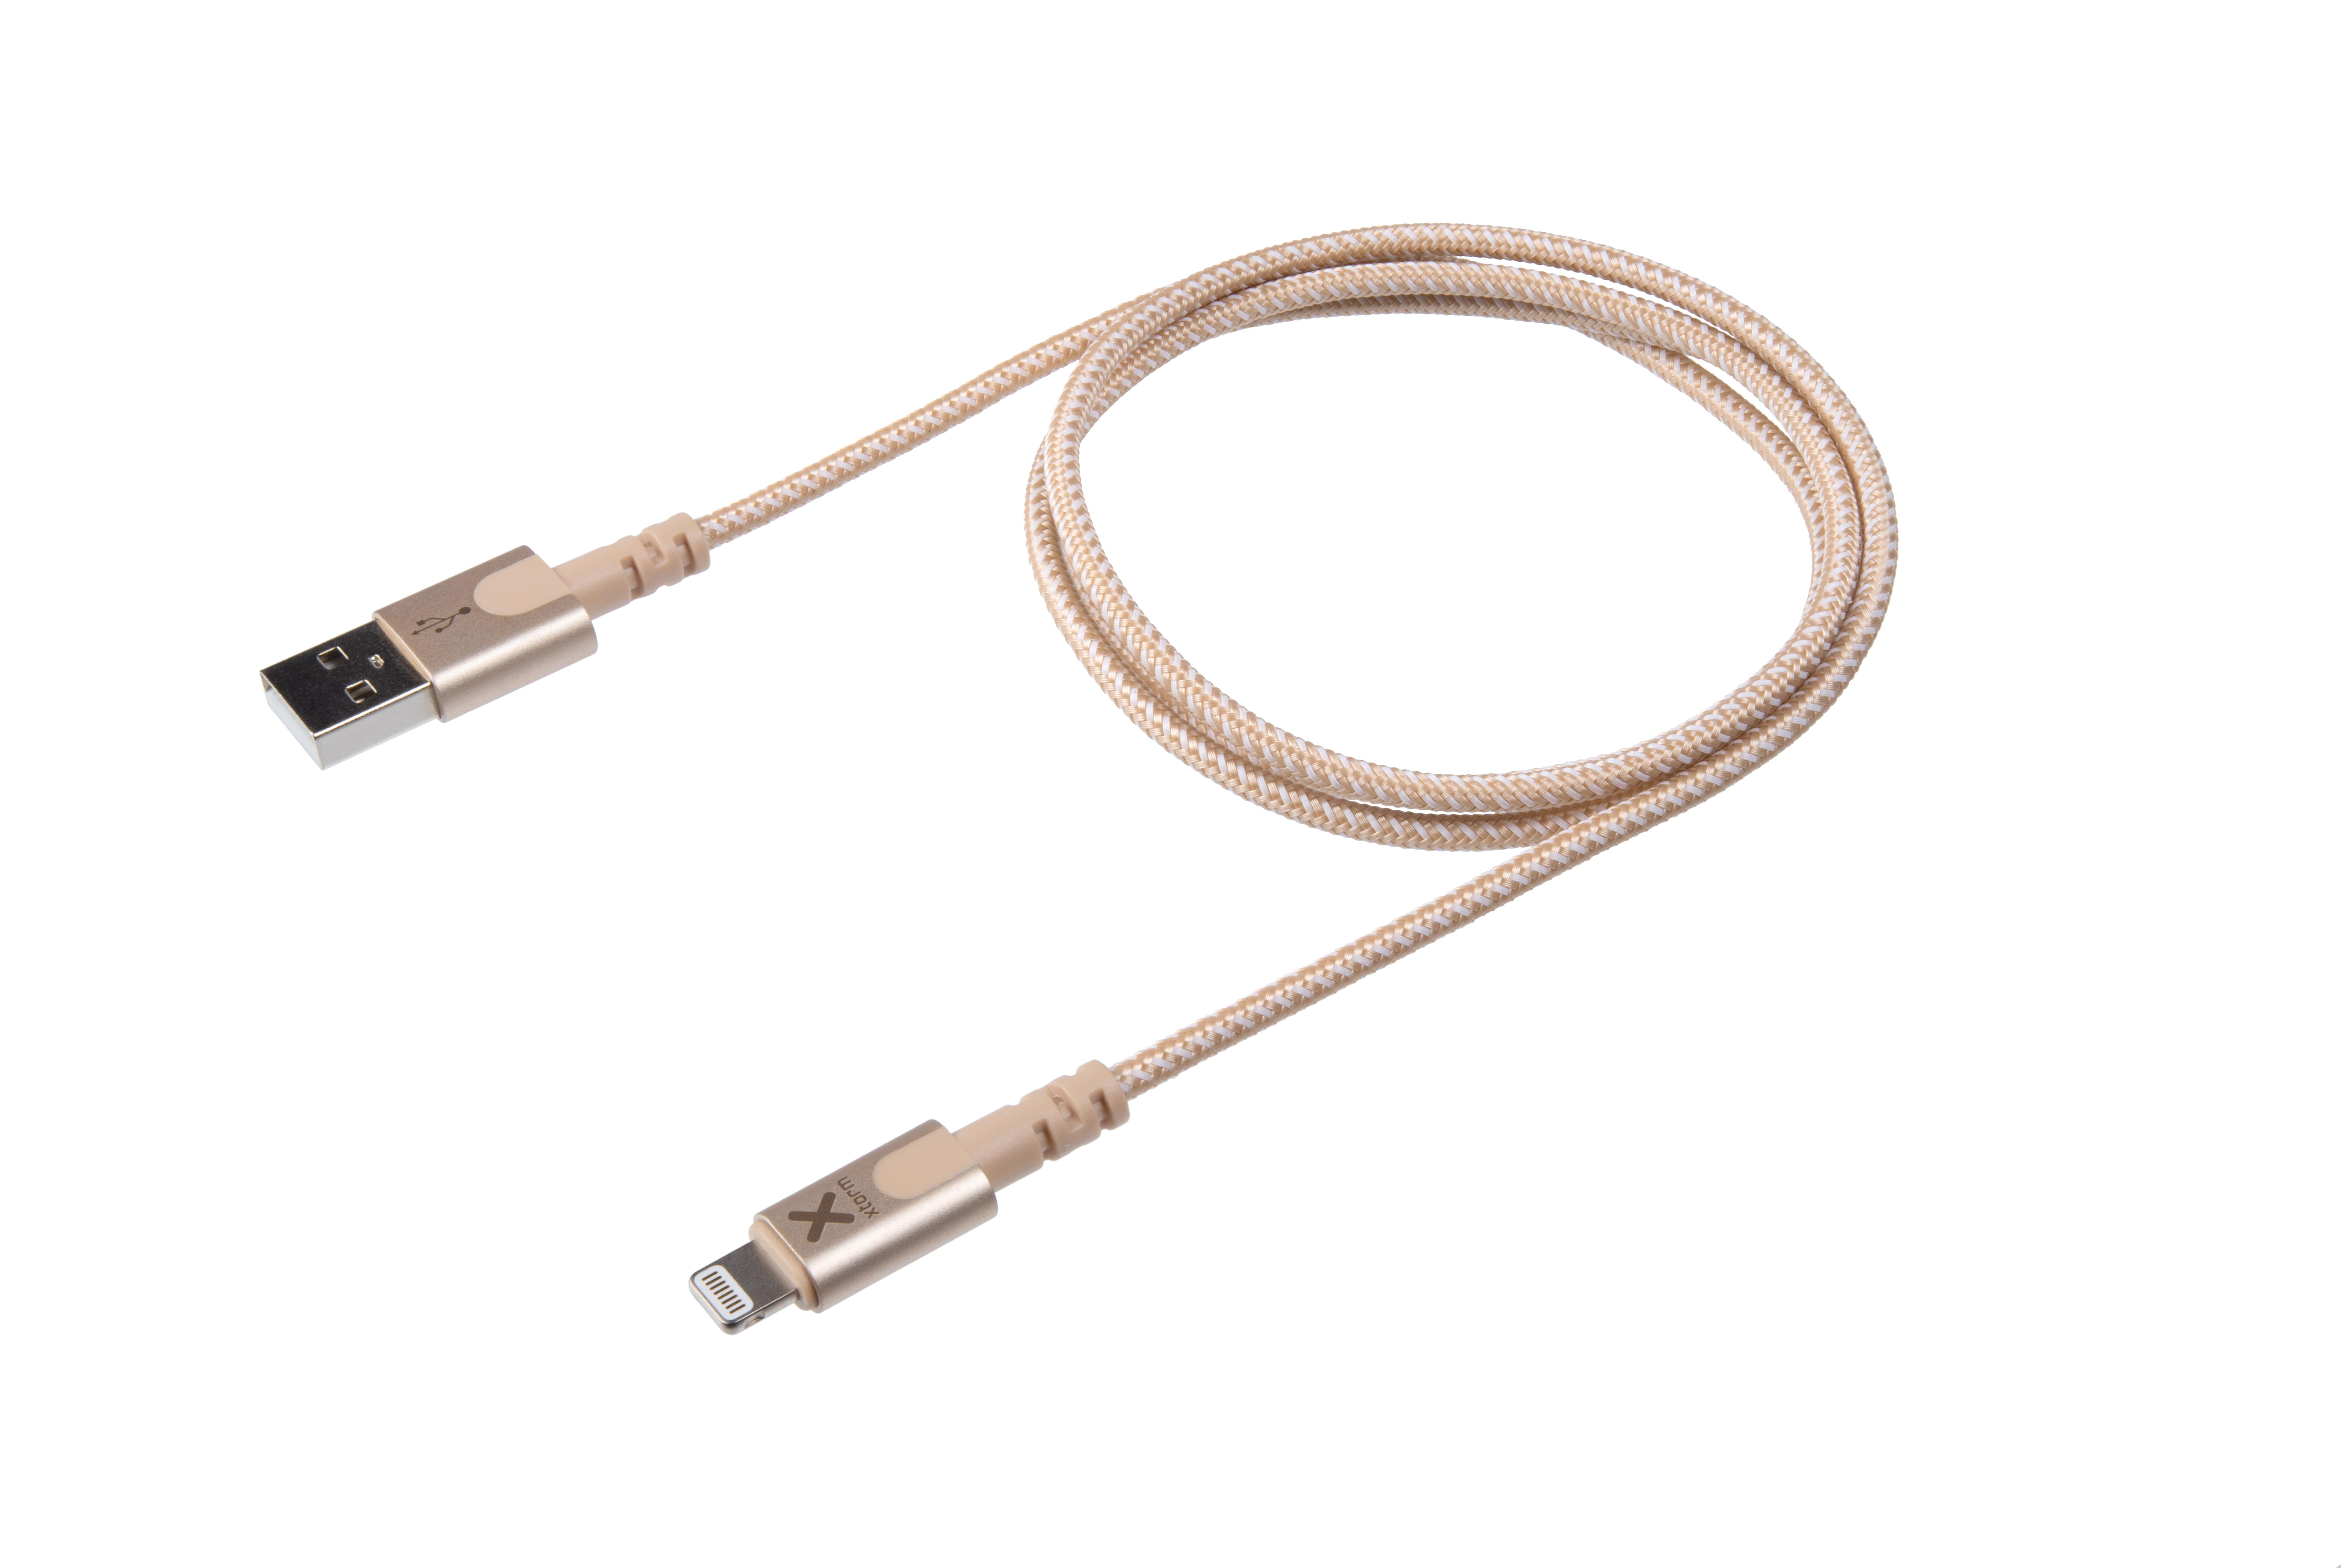 XTORM Original USB (1m) USB Lightning Gold auf Kabel Kabel